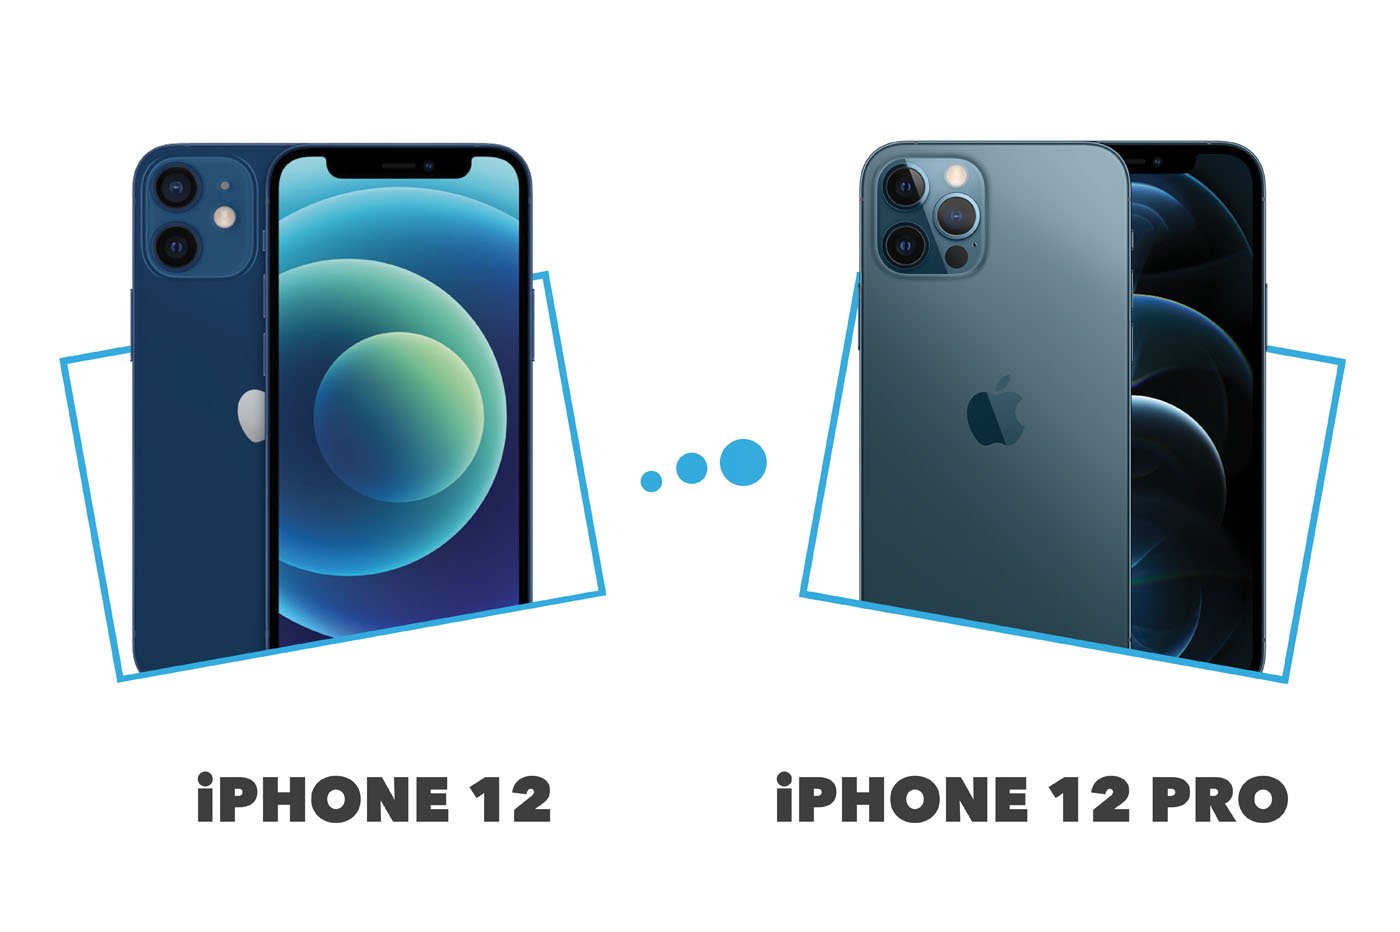 Comparatif iPhone 12 vs iPhone 12 Pro